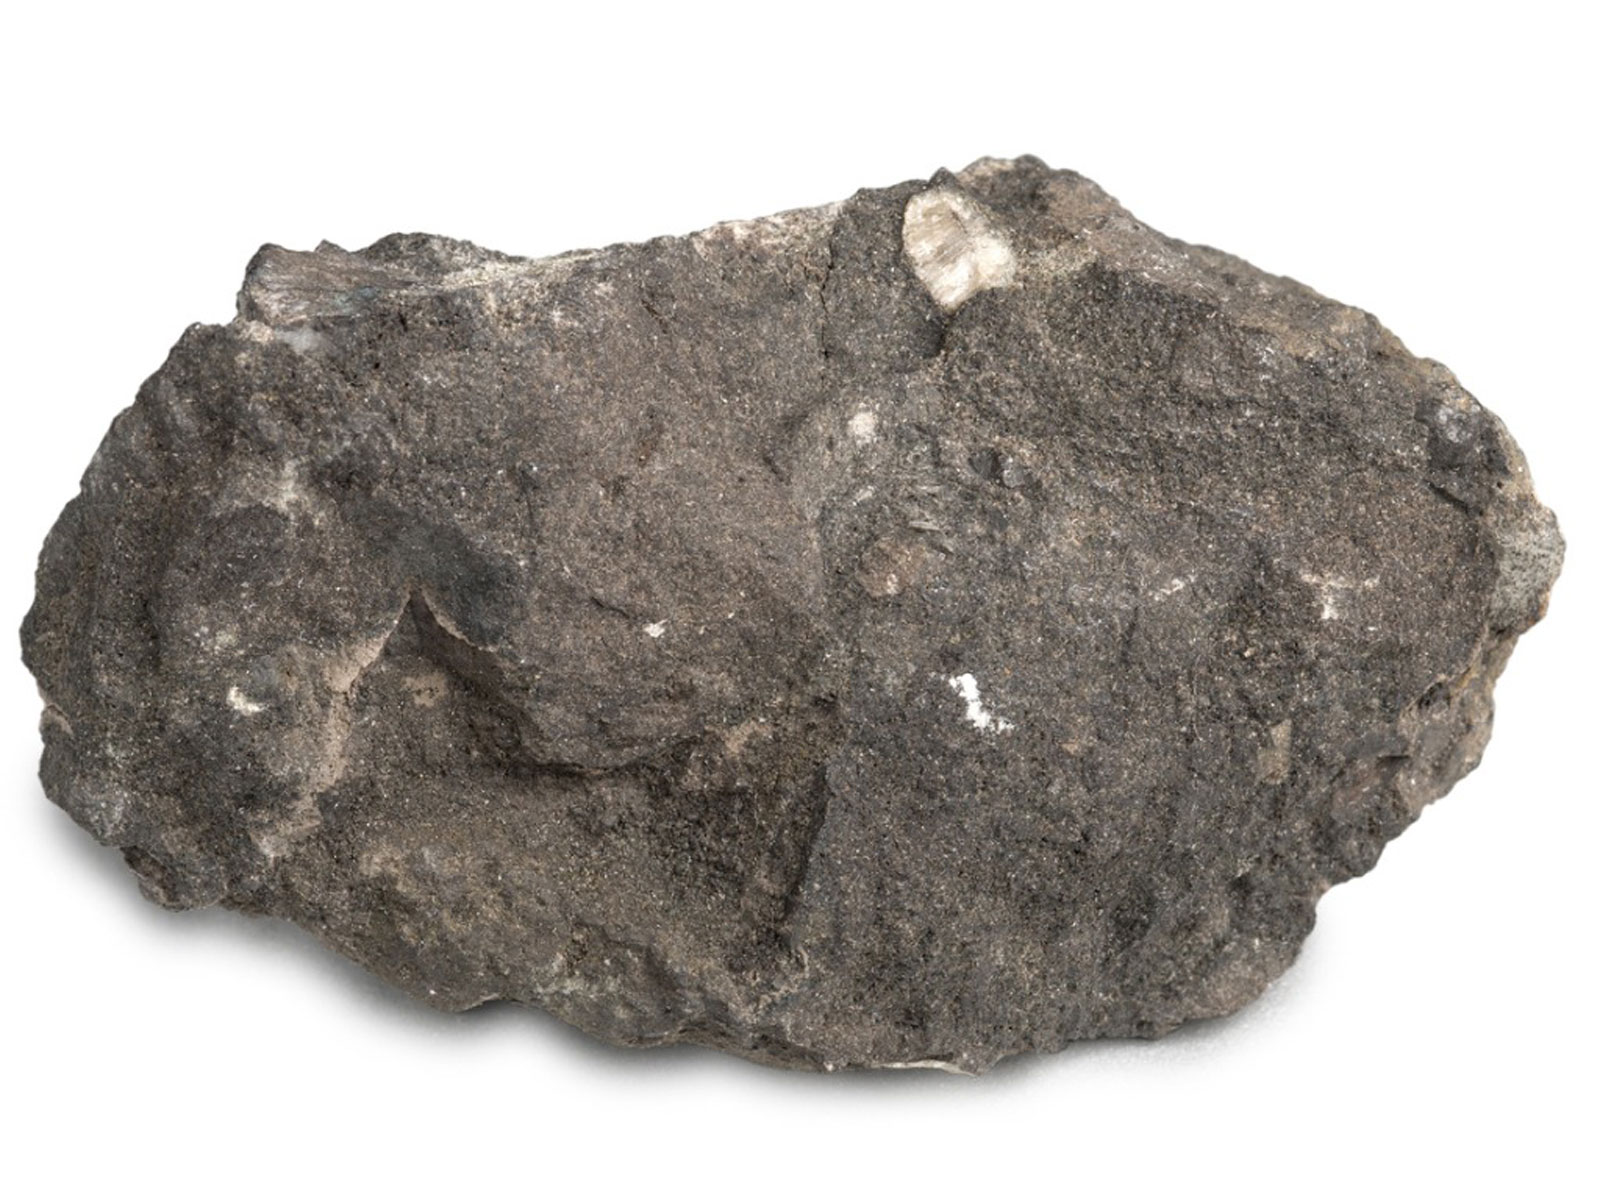 A big grey phosphorus rock on a white background